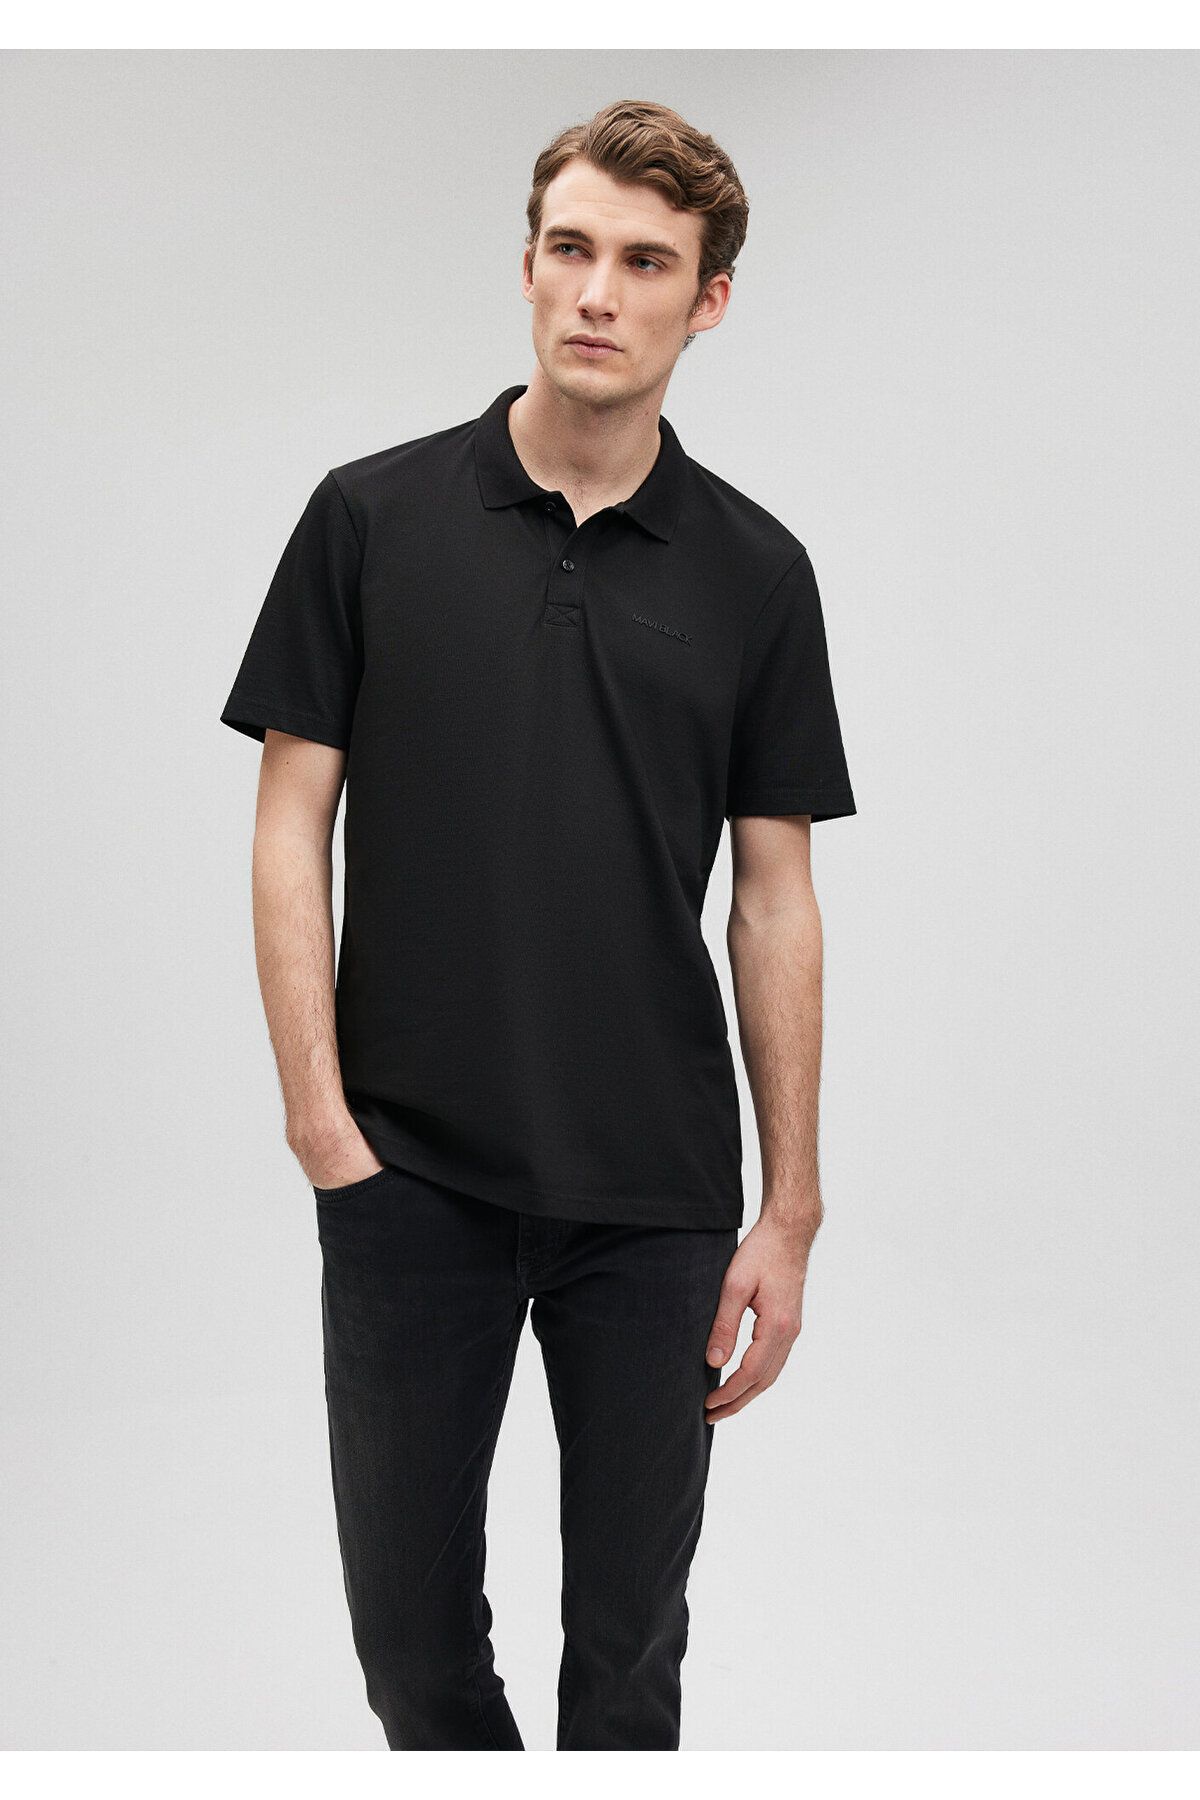 Mavi Black Siyah Polo Tişört Regular Fit / Normal Kesim 0611837-900